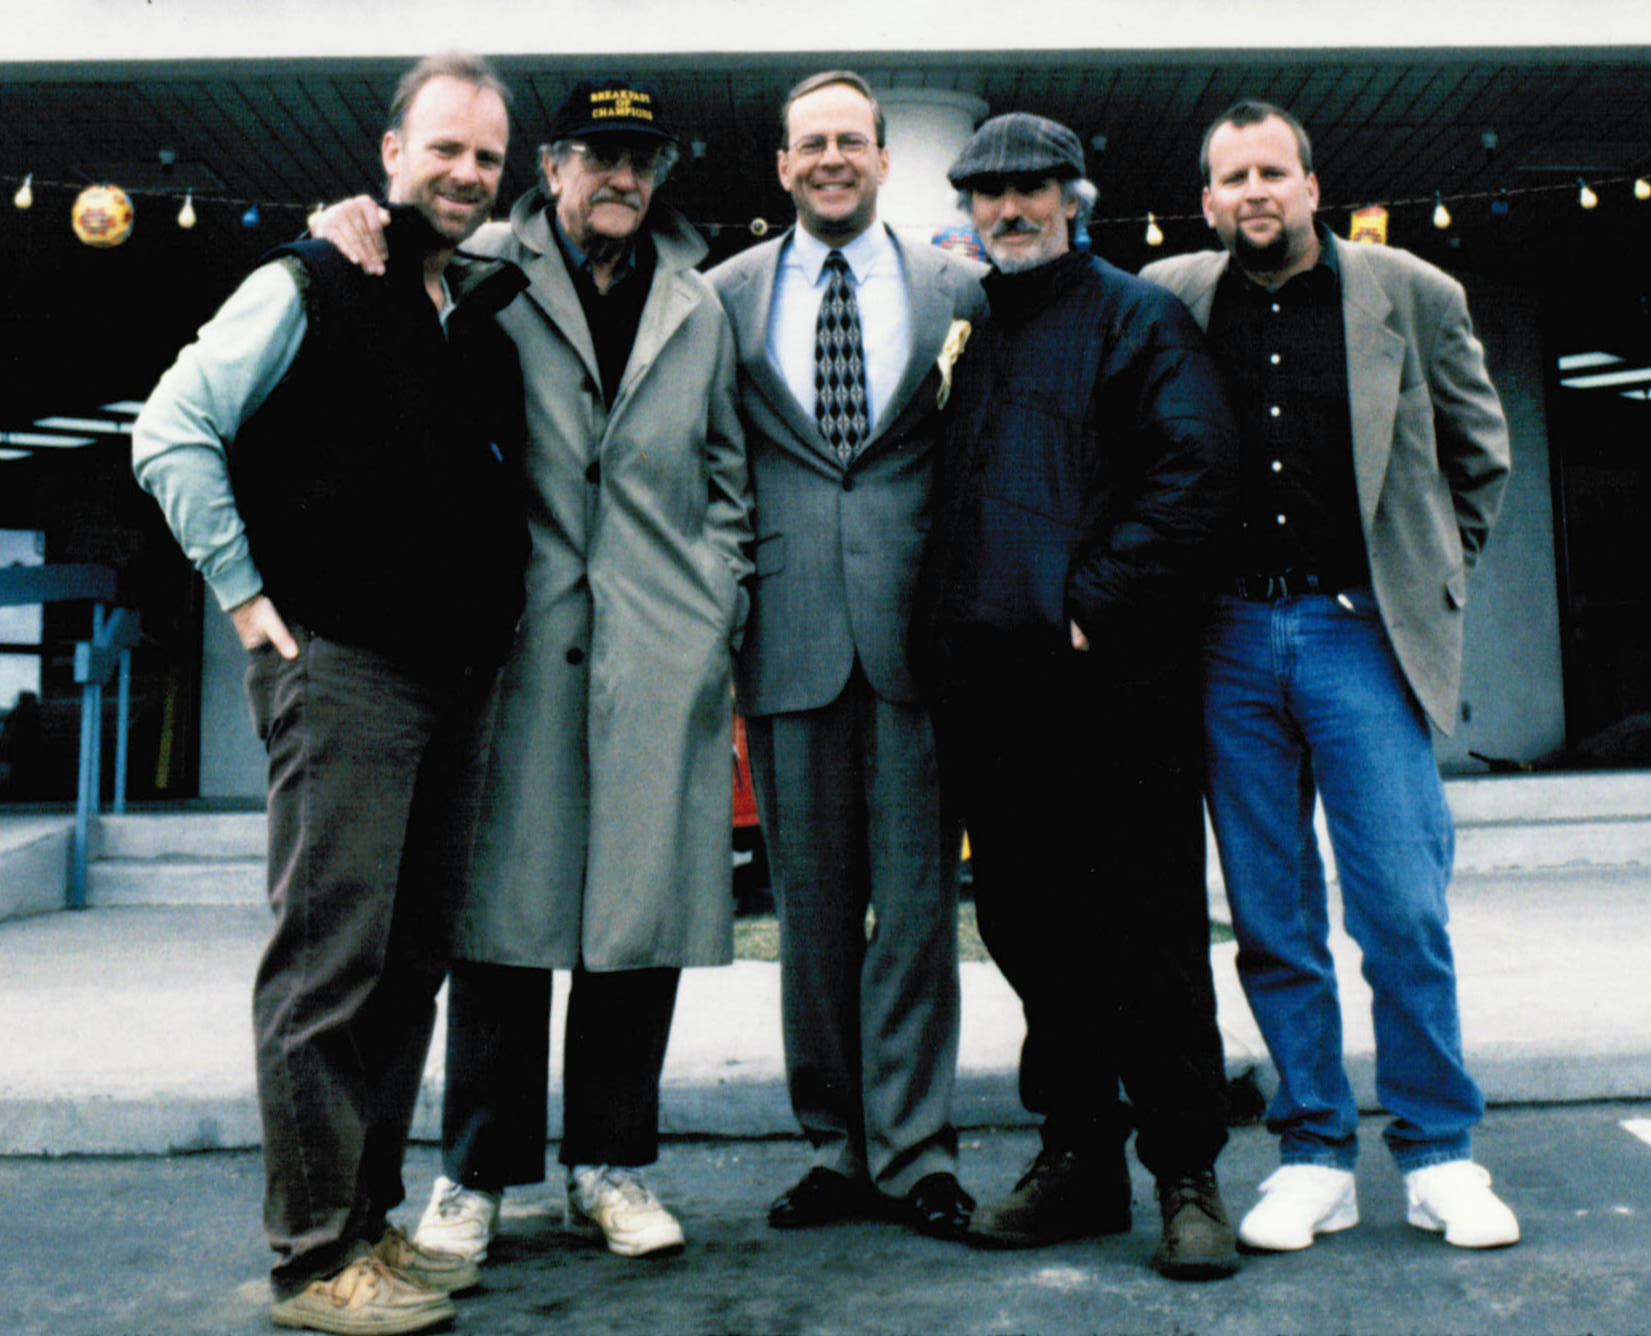 David Blocker, Kurt Vonnegut, Bruce Willis, Alan Rudolph and David Willis on set of 